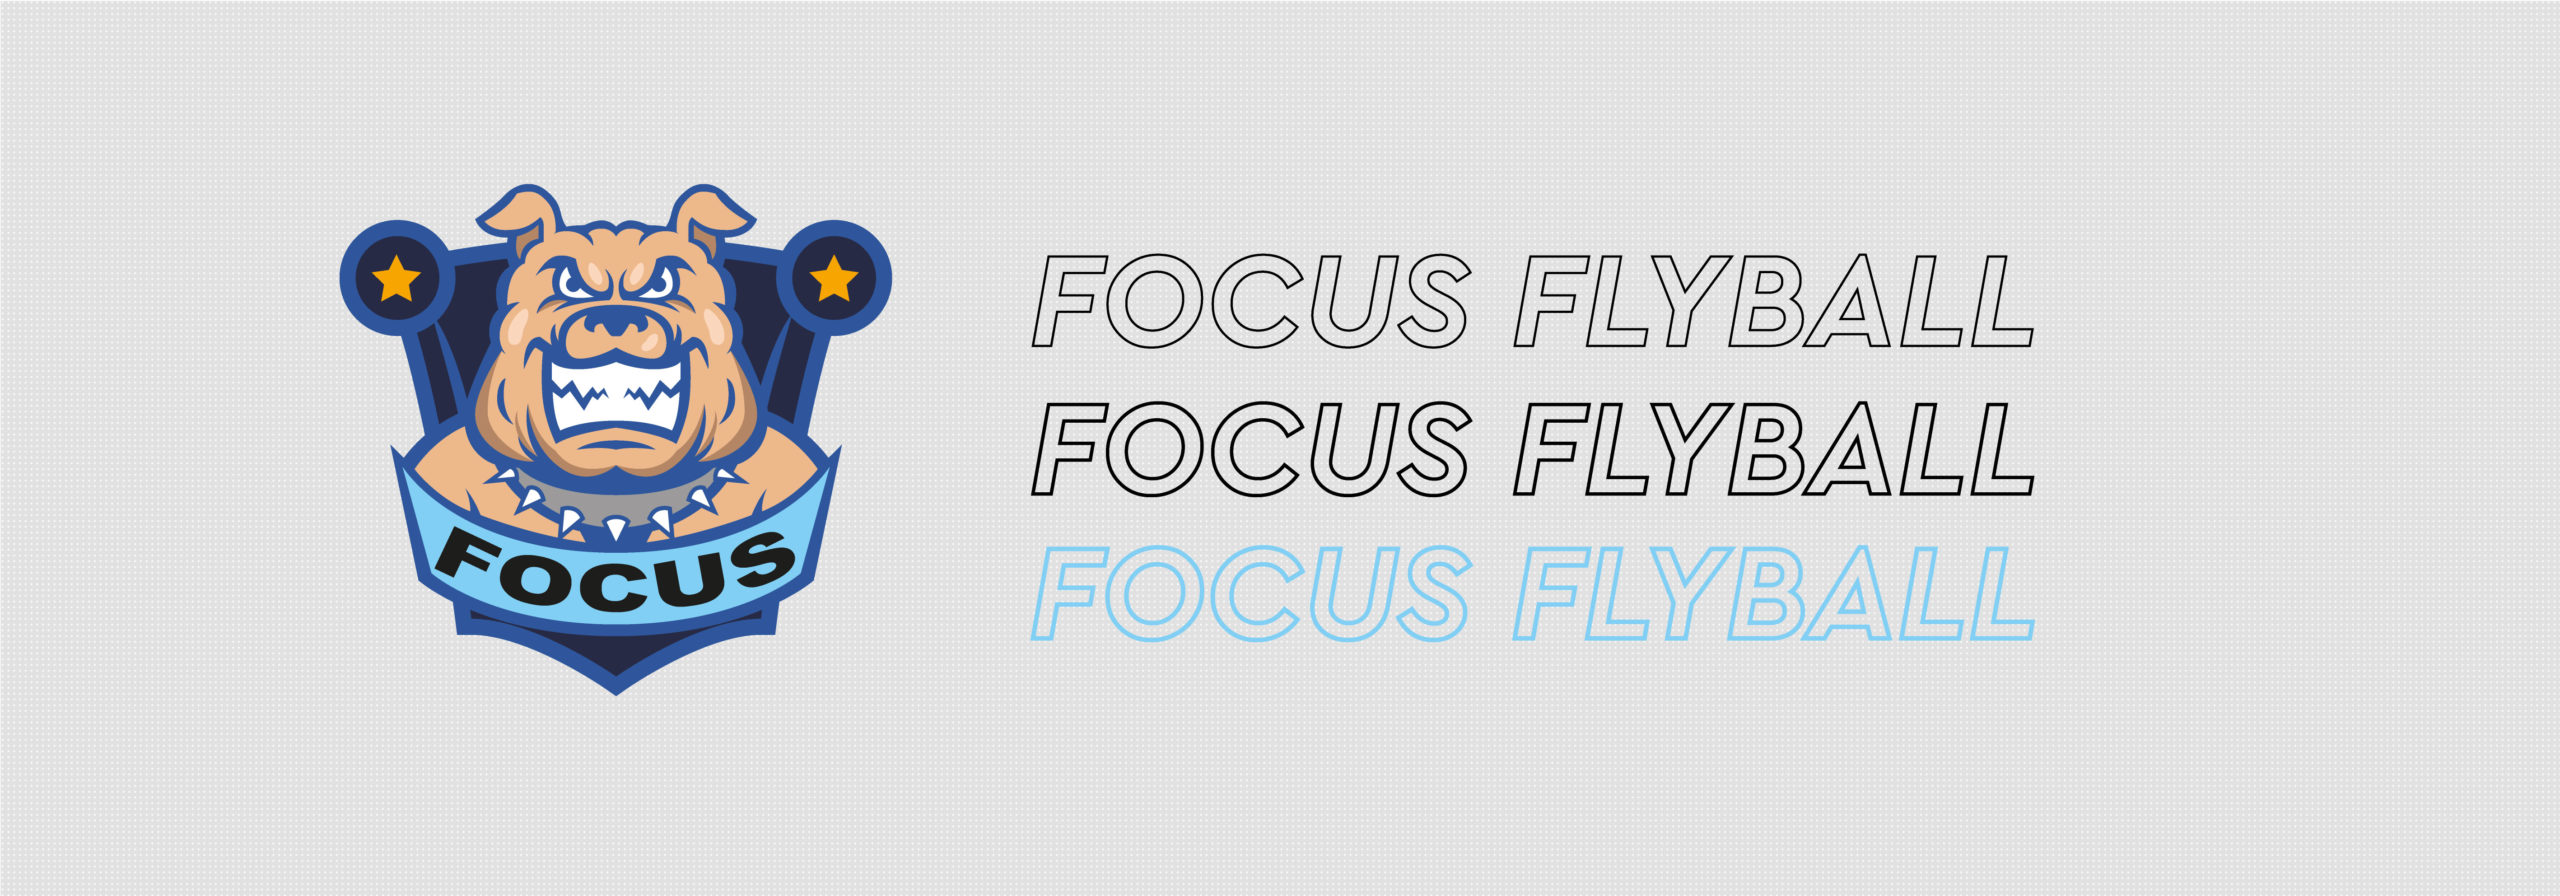 Focus Flyball Team